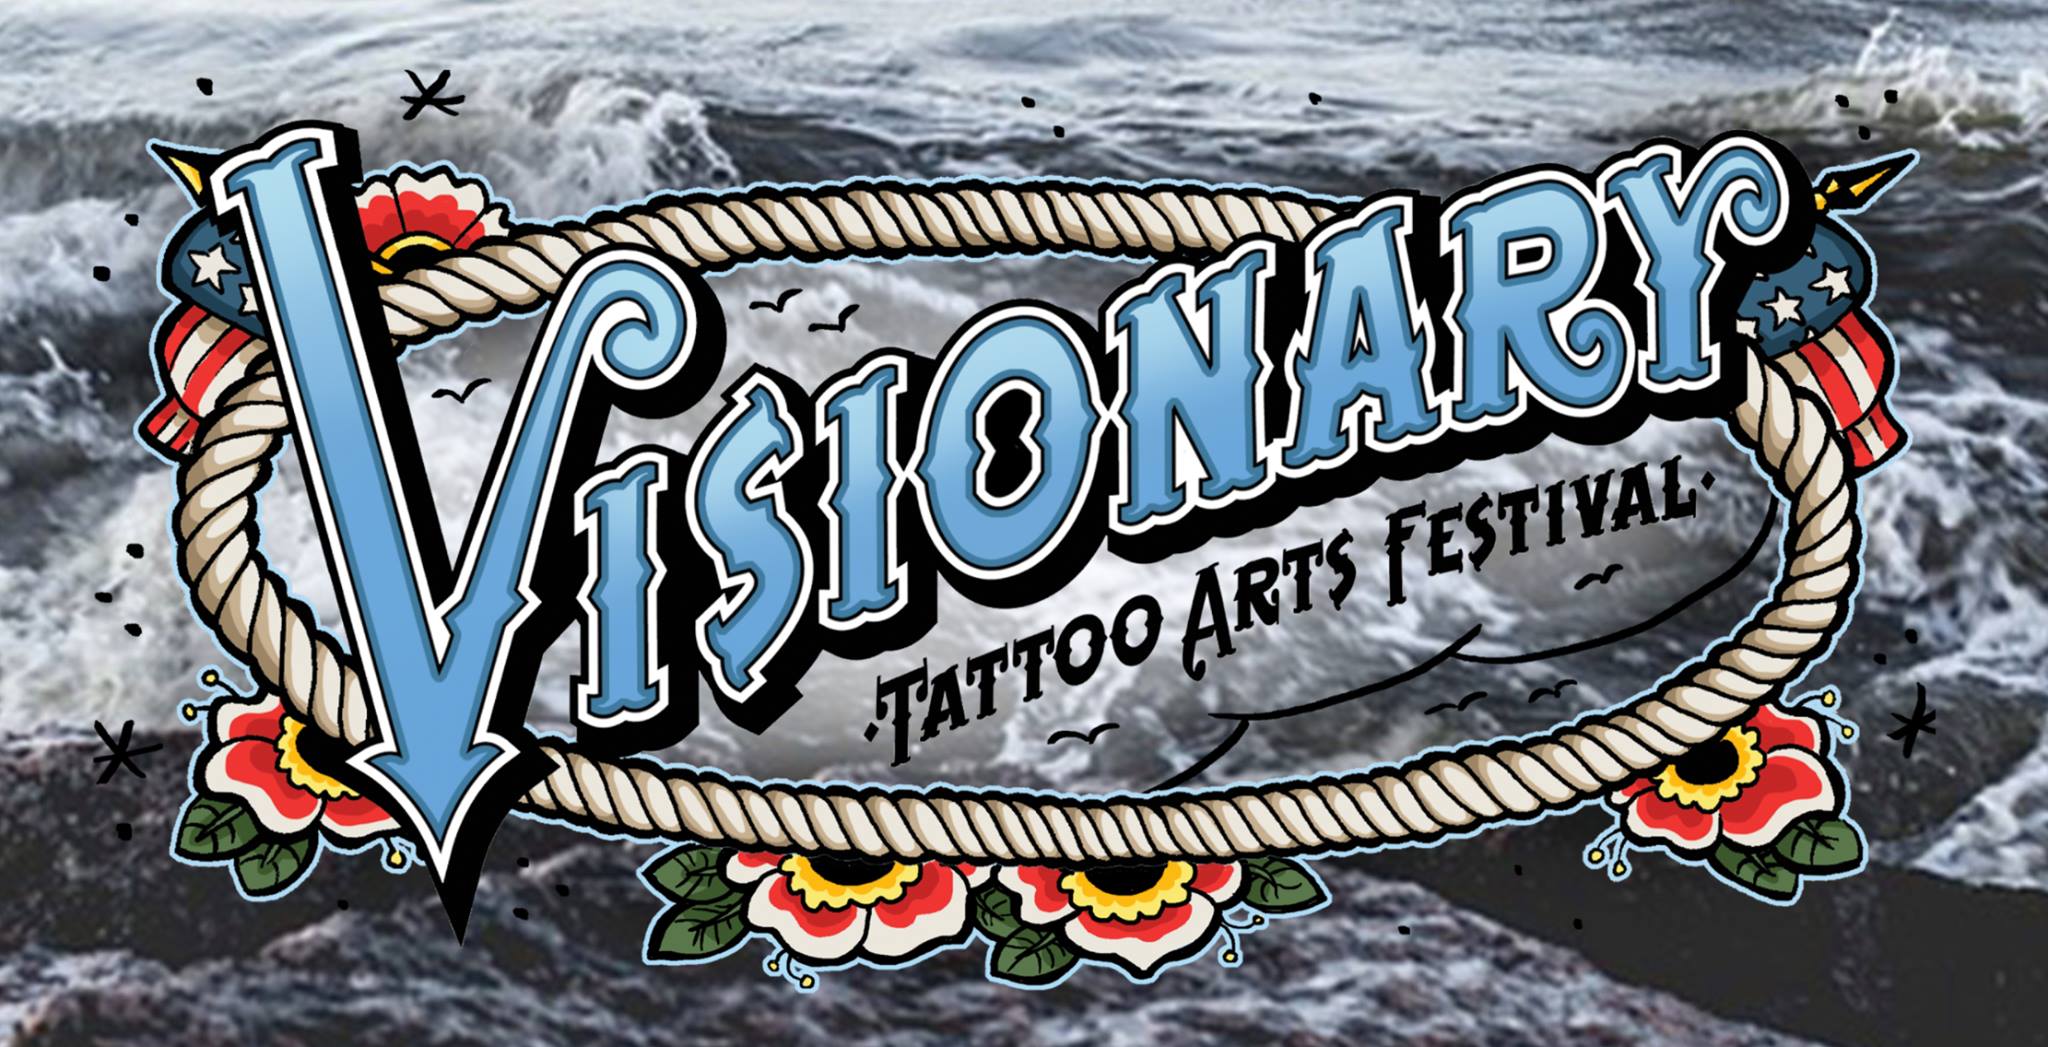 visionary tattoo arts festival logo on getty